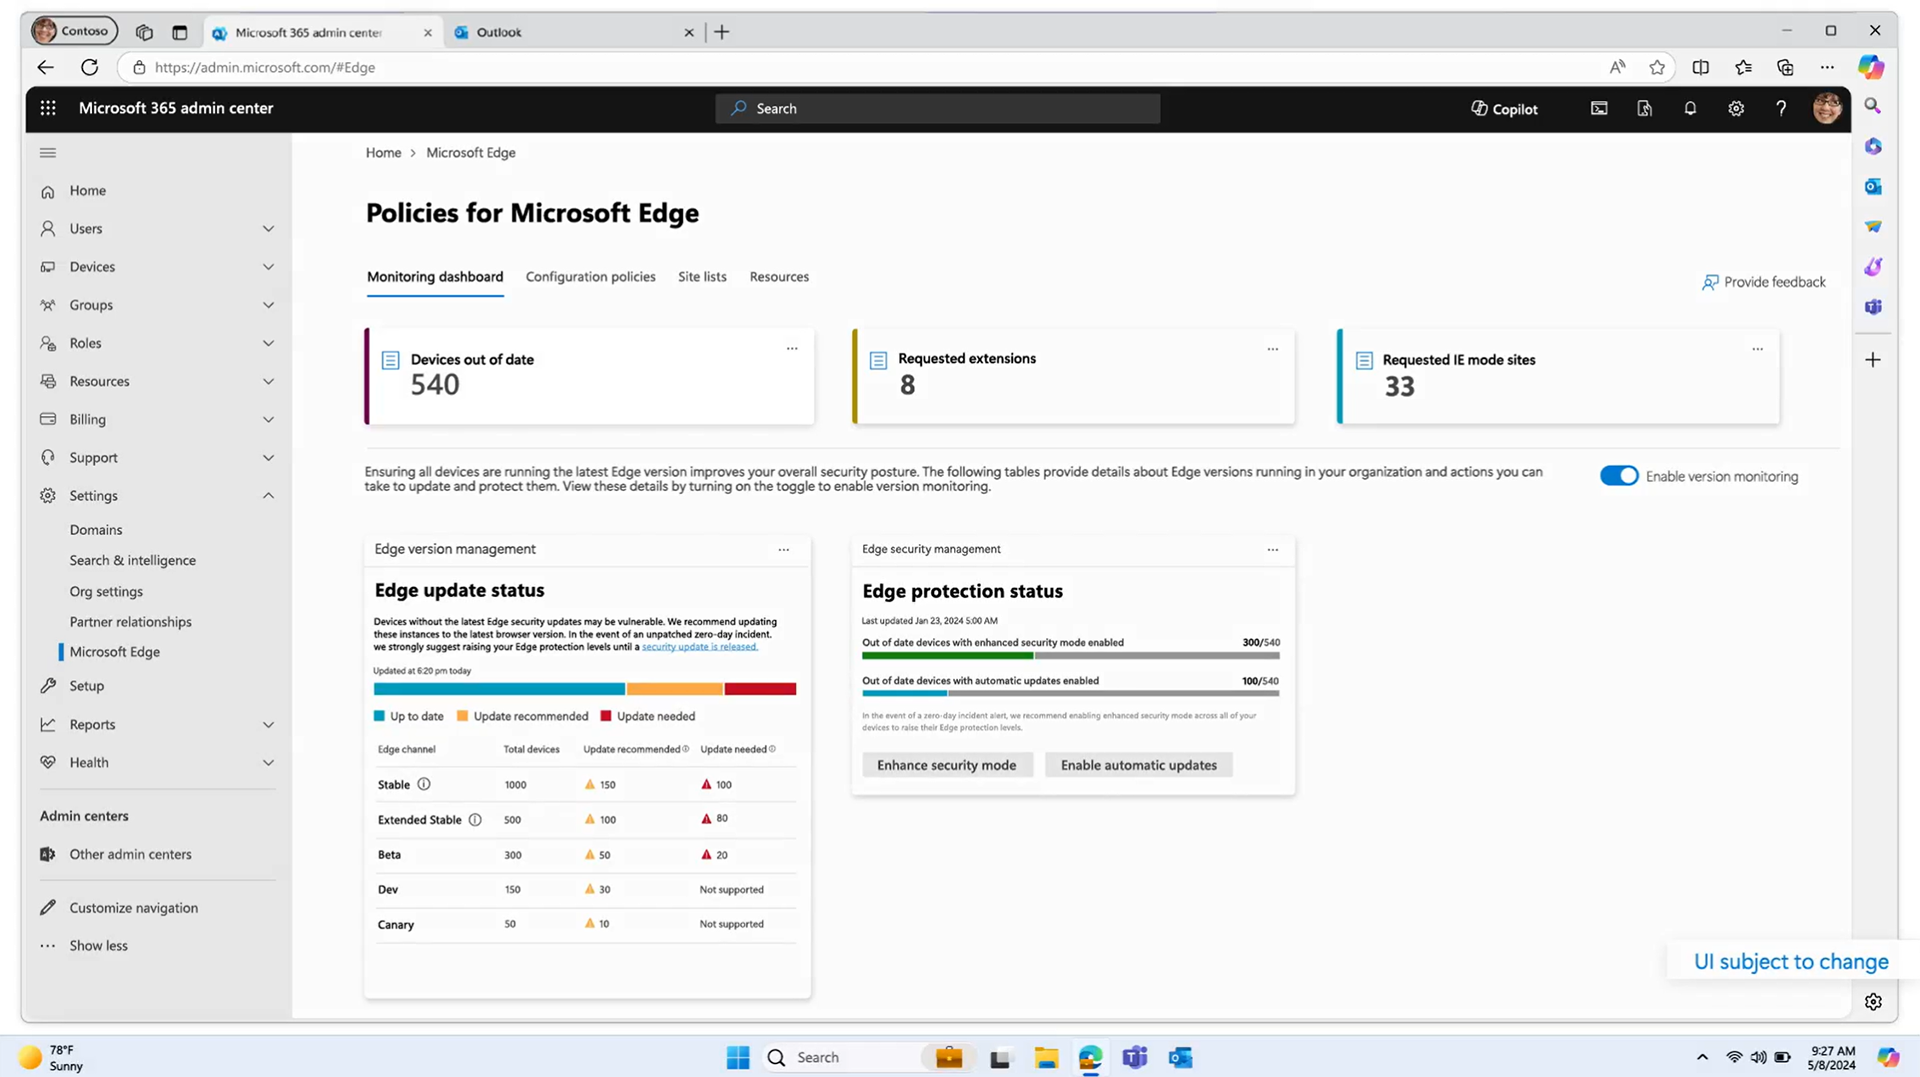 Profiles in Microsoft Edge screen